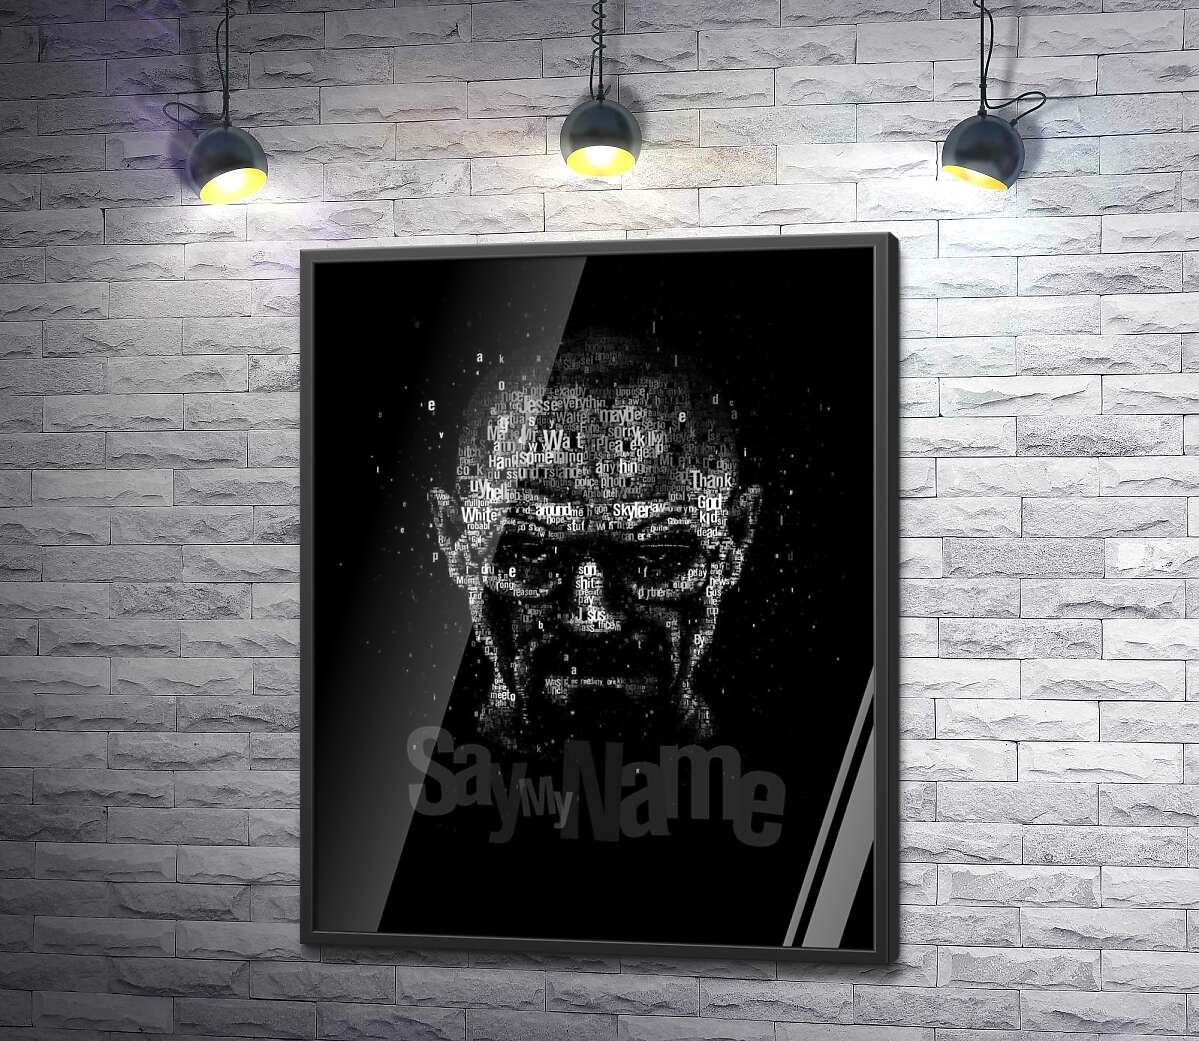 постер Обличчя героя серіалу Уолтера Уайта з написом "say my name"